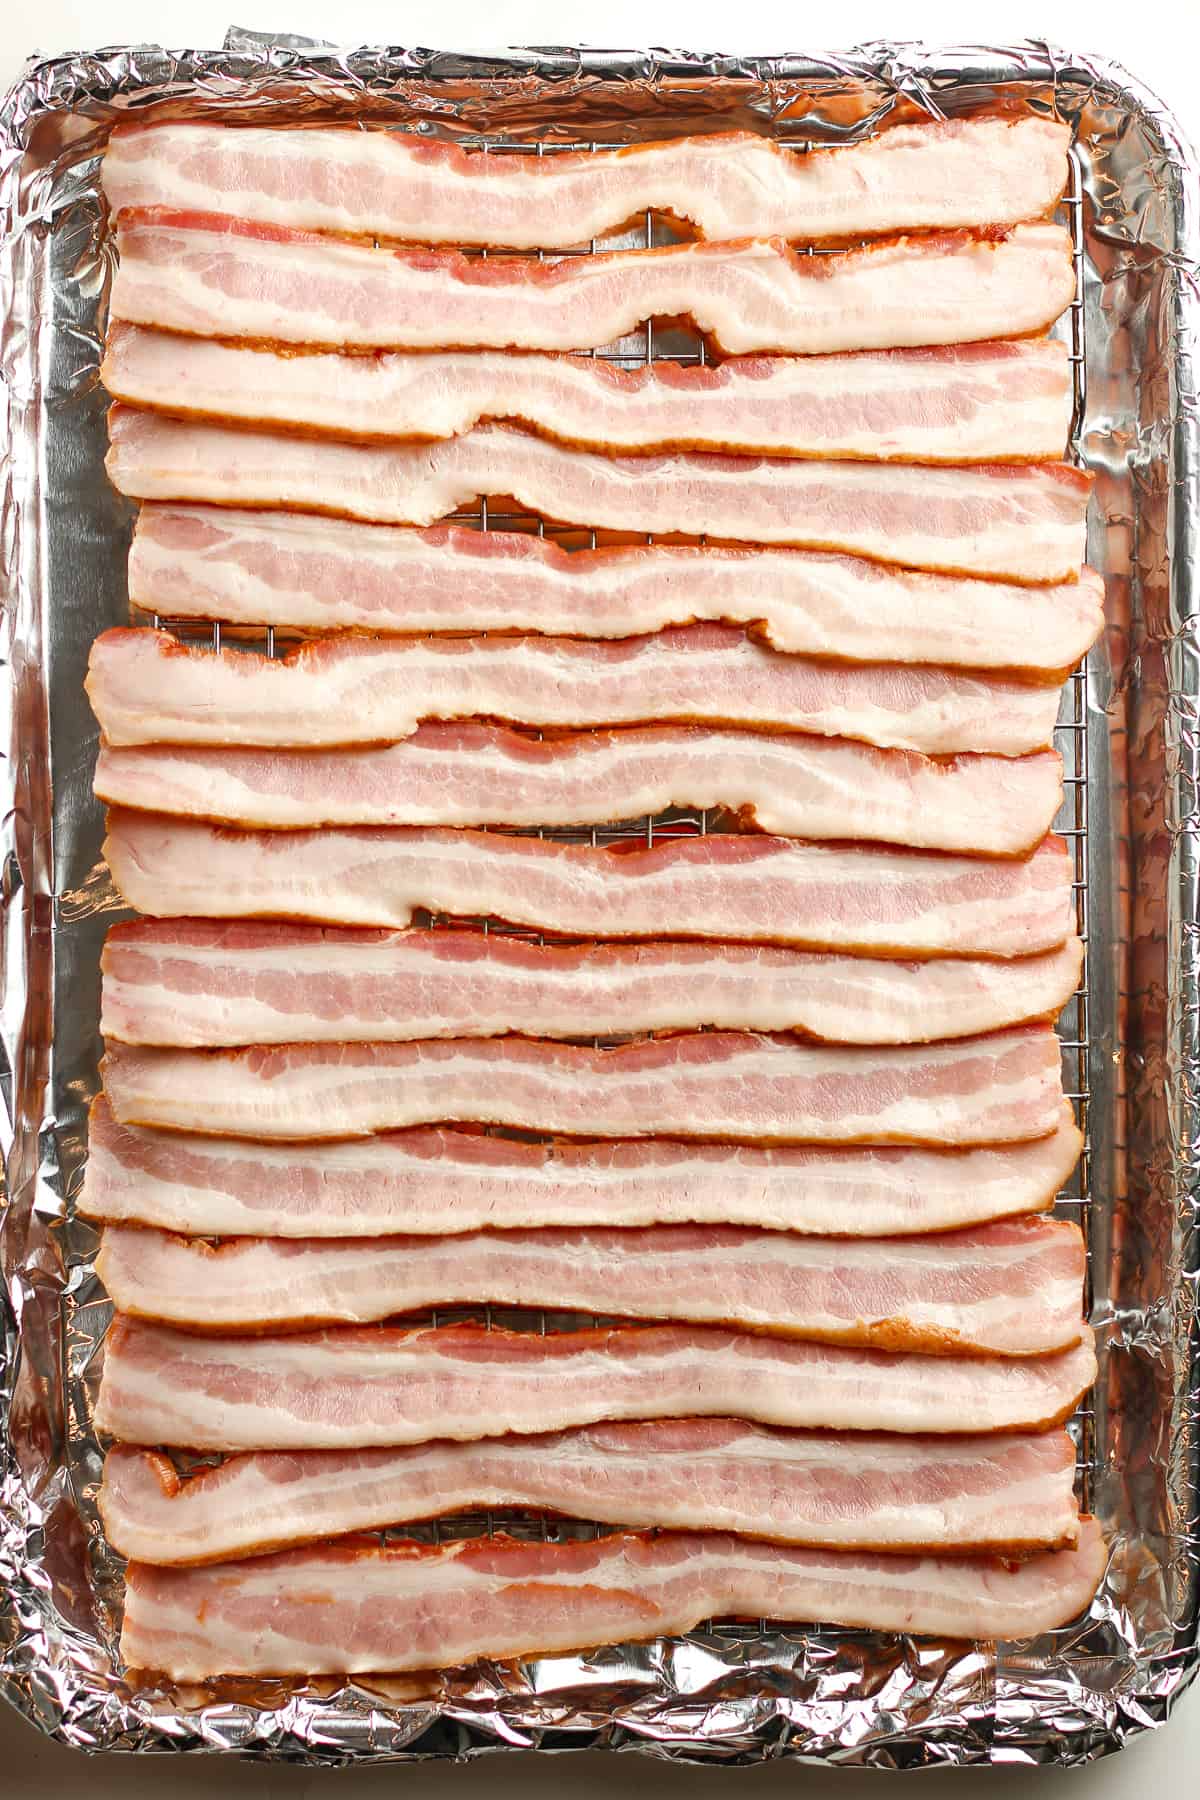 A sheet pan of raw bacon.